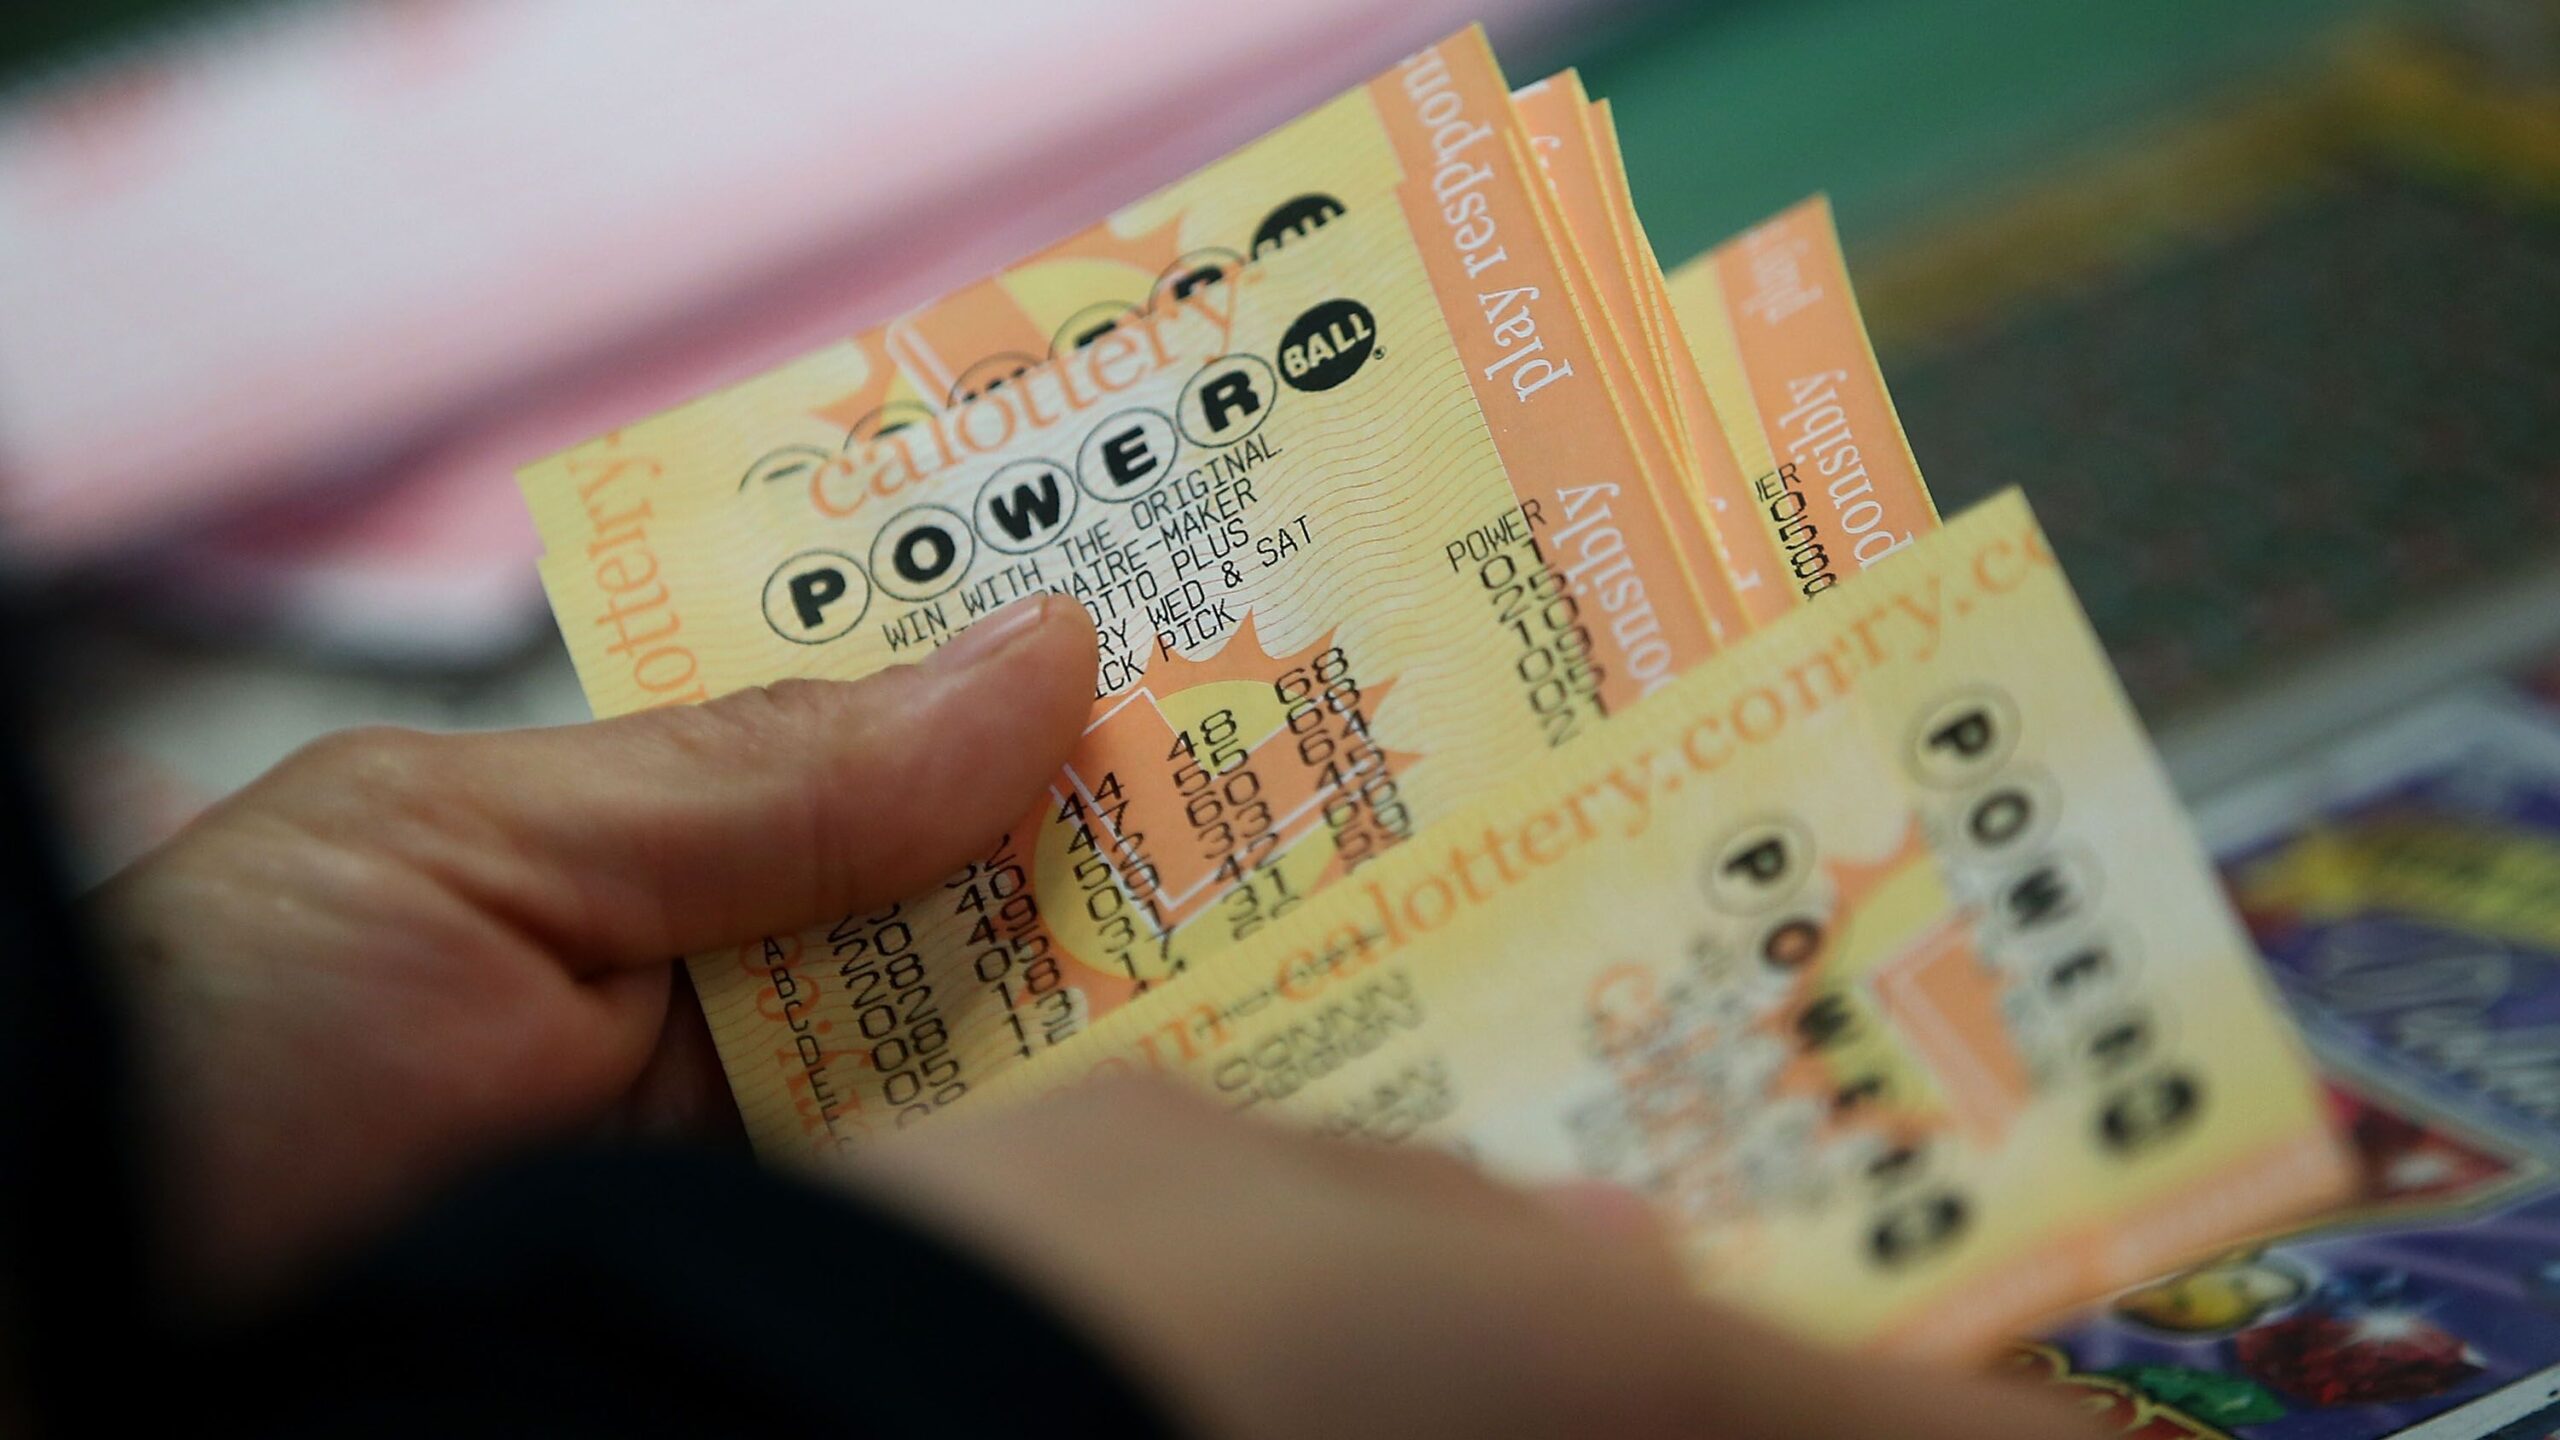 Monday's estimated jackpot is now $650 million. Photo credit: Justin Sullivan/Getty Images...